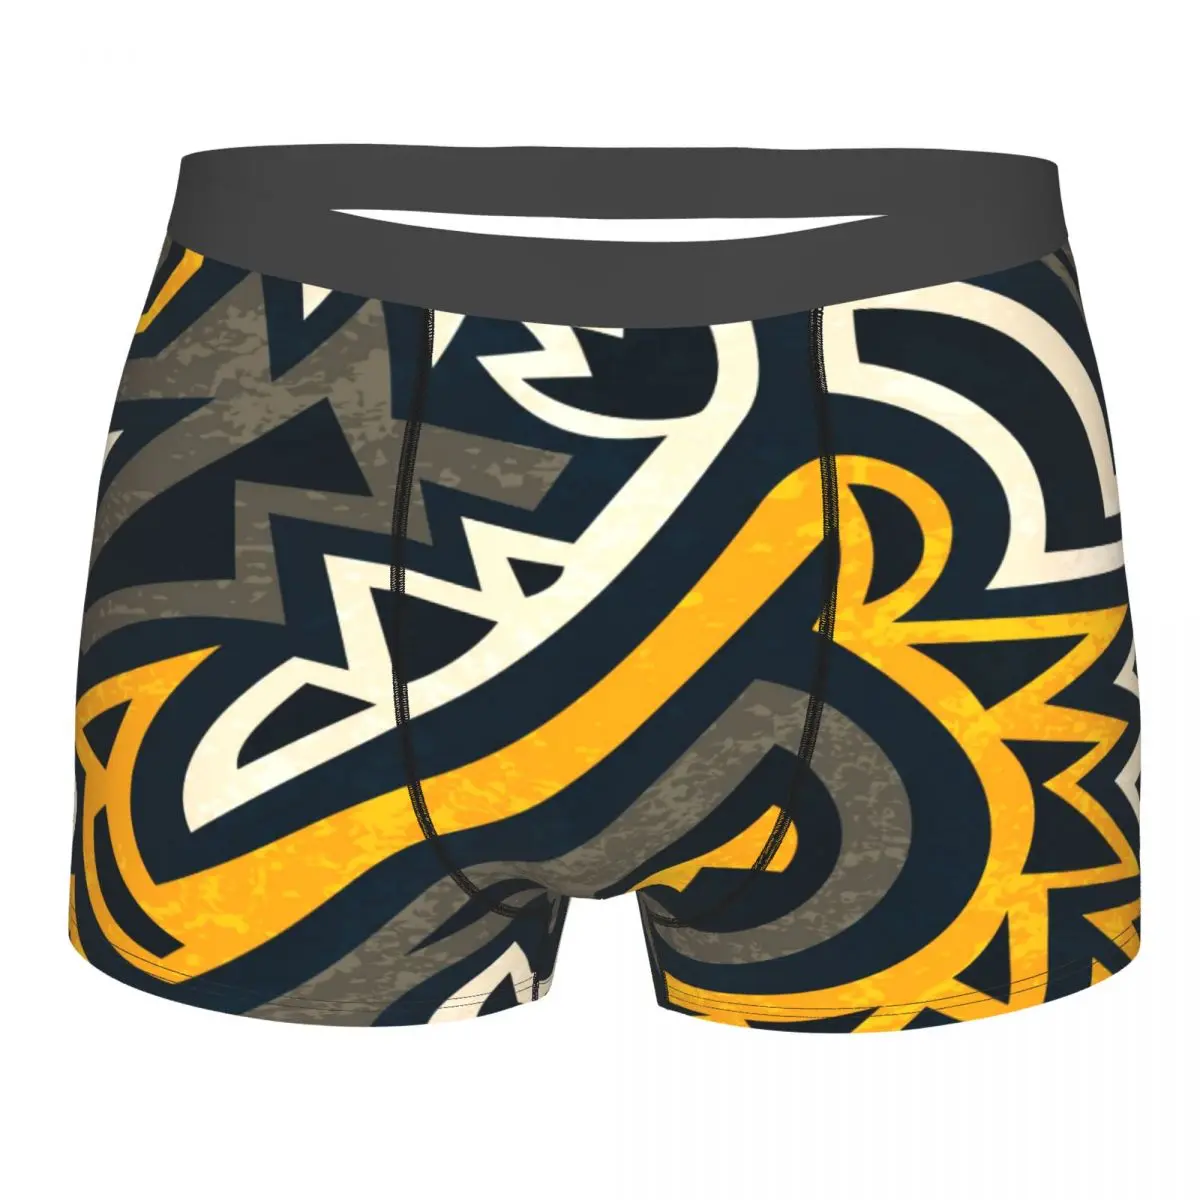 Men's Panties Underpants Boxers Underwear African Geometric Grunge Print Sexy Male Shorts